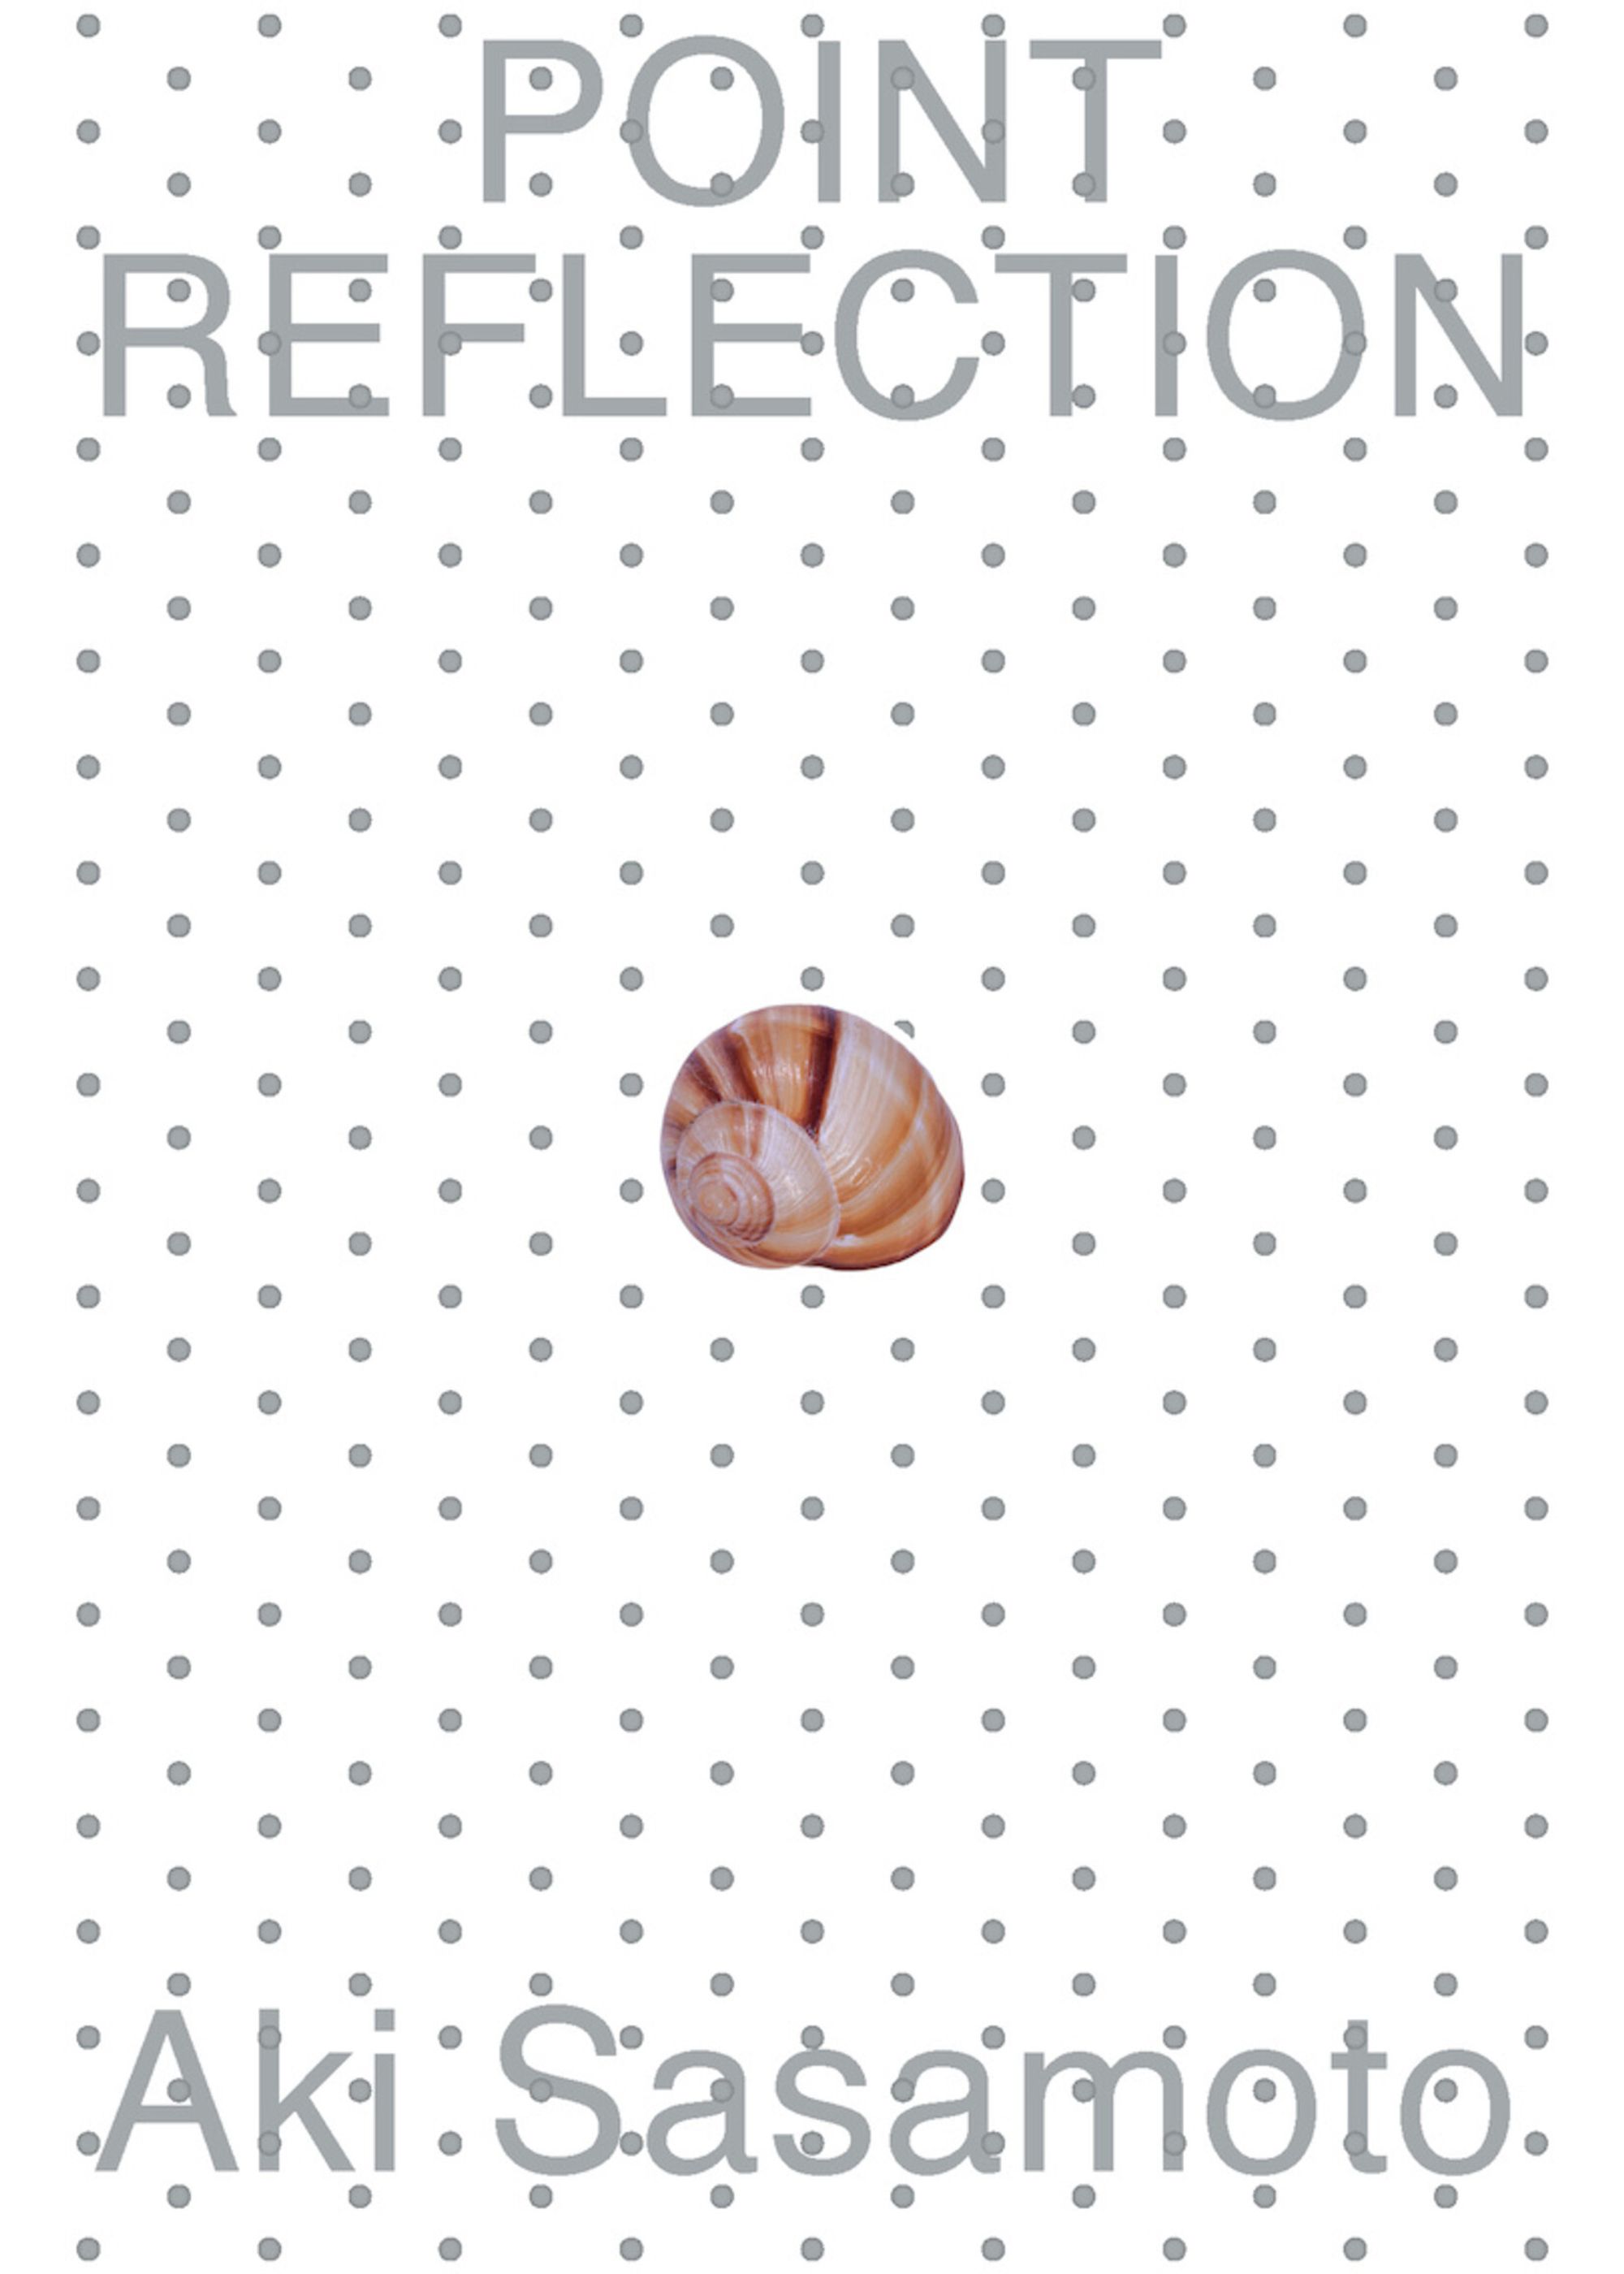 Detail view of Aki Sasamoto: Point Reflection against a plain gray background